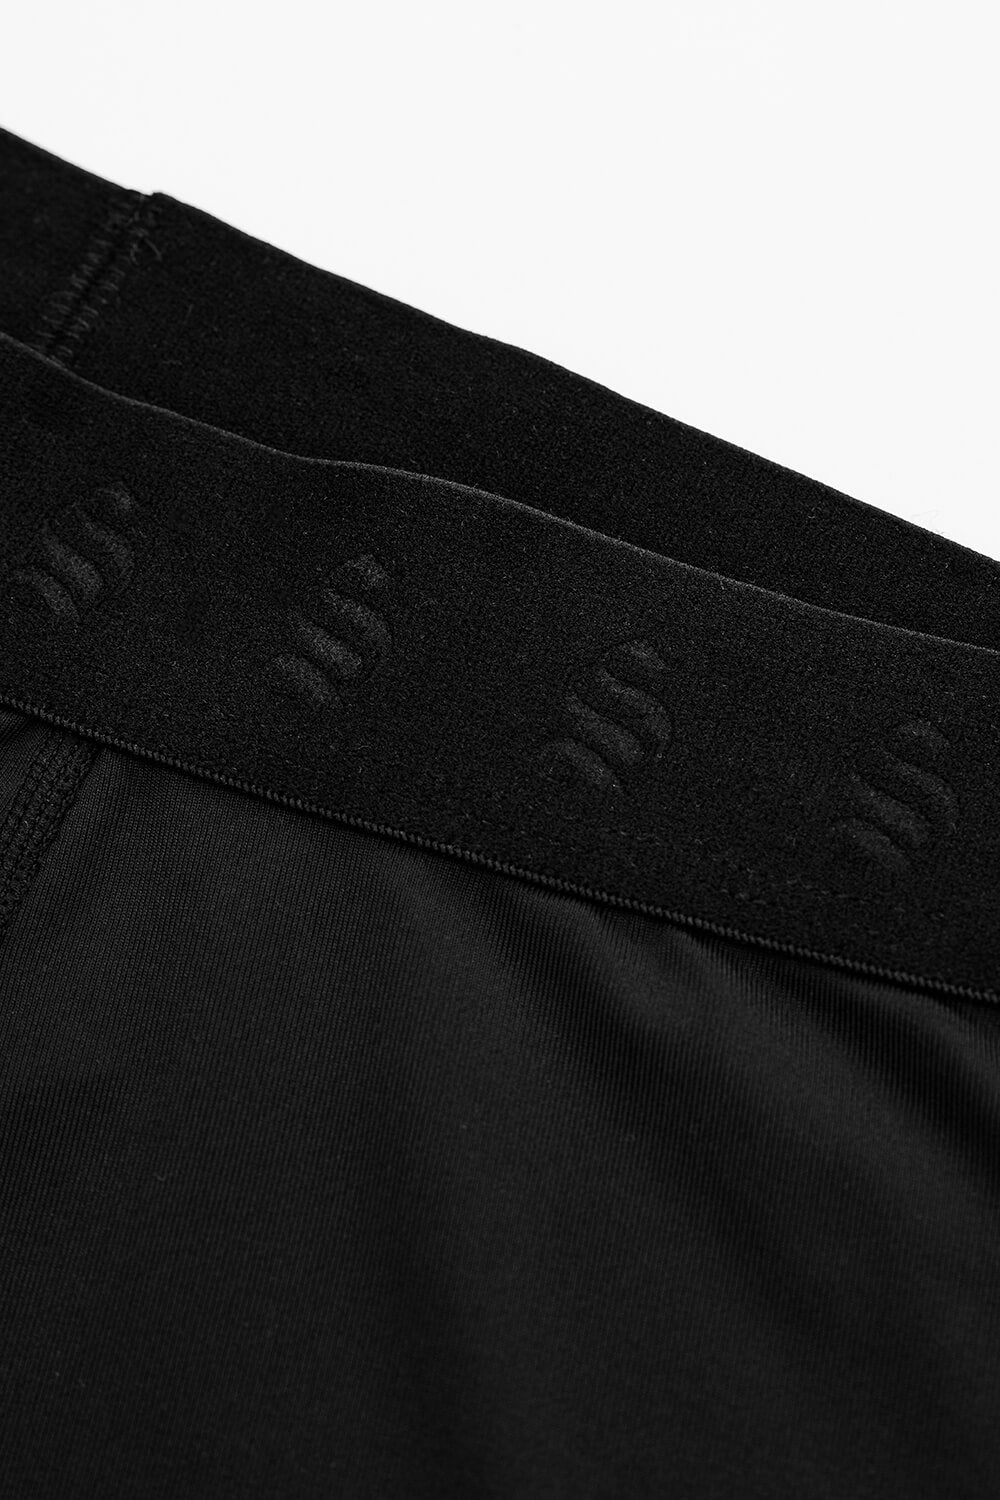 Emblem Boxer Shorts - Black (2 Pack)